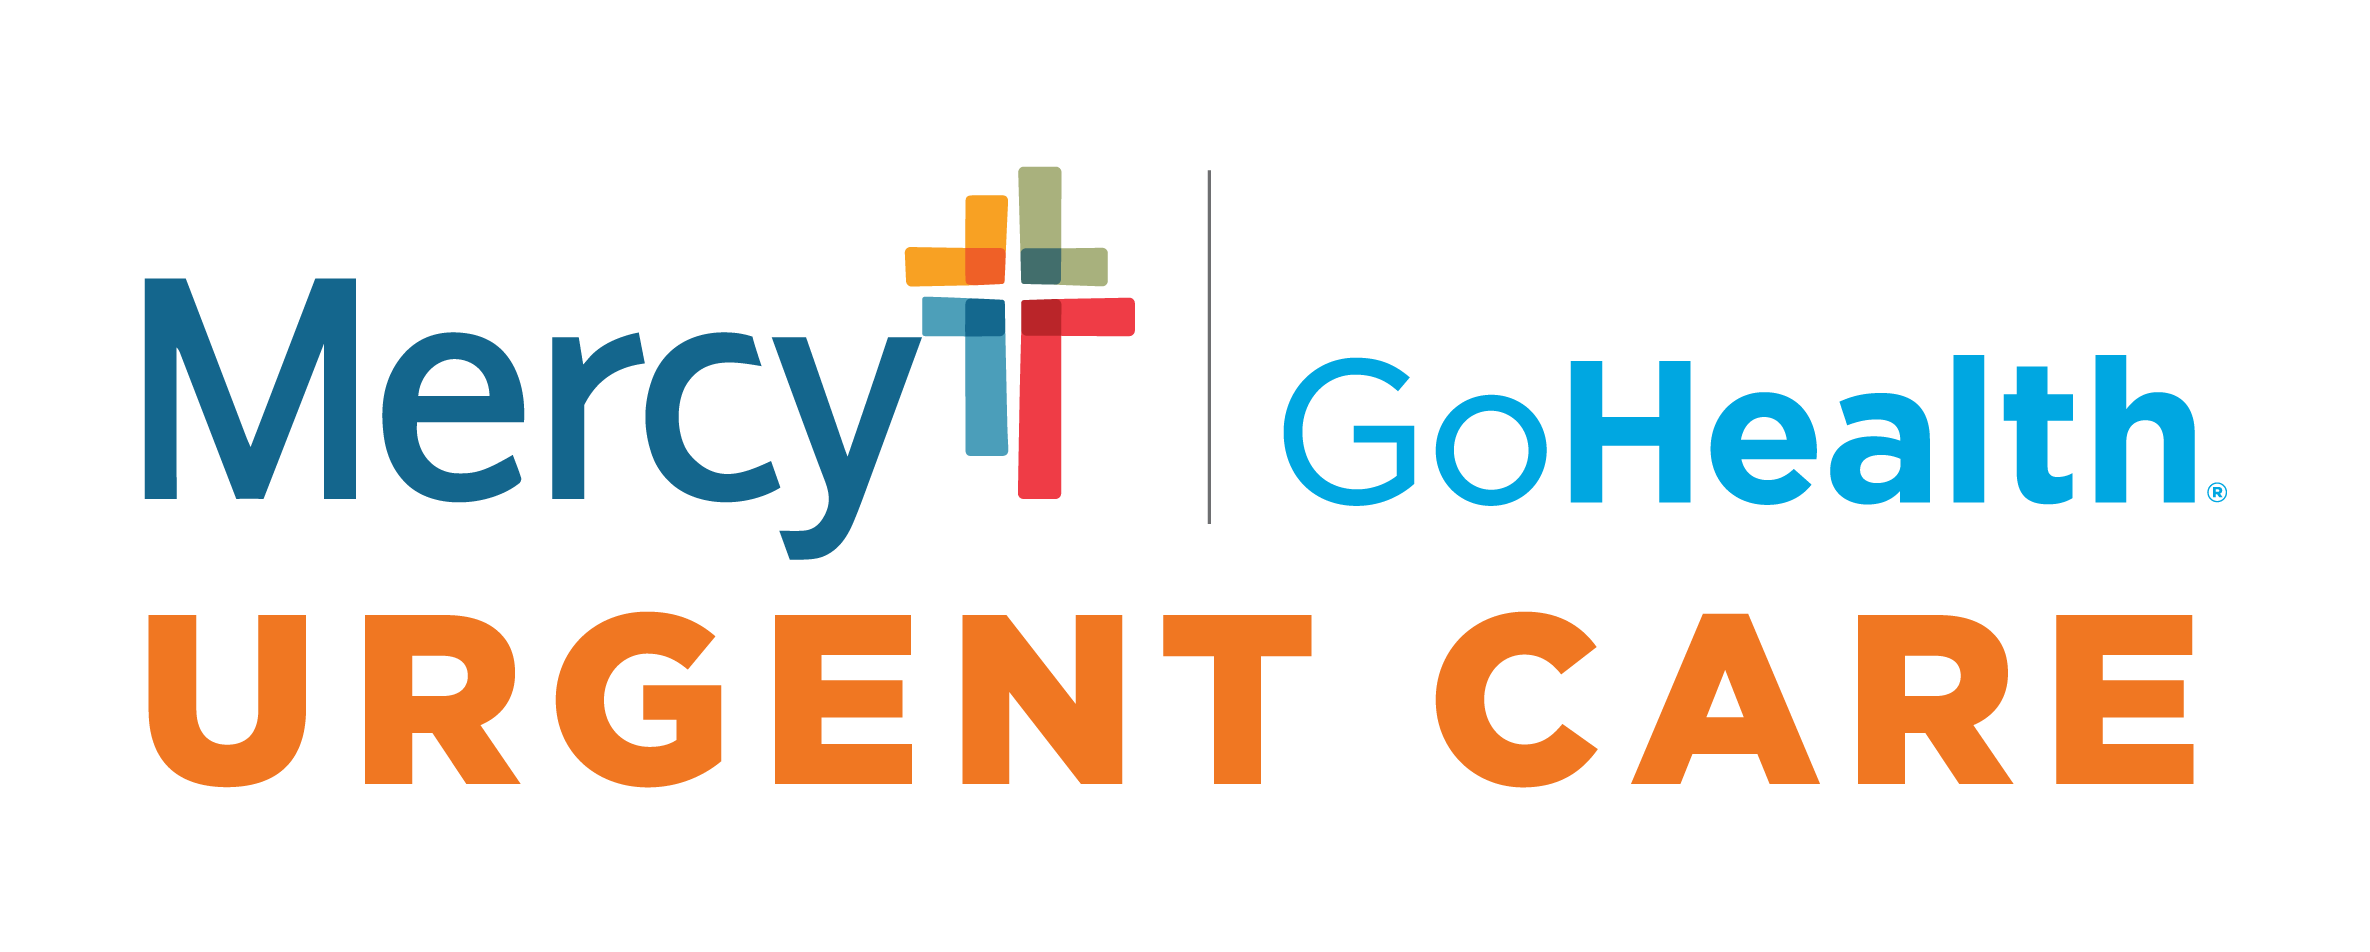 Mercy- GoHealth Urgent Care - Fayetteville Logo